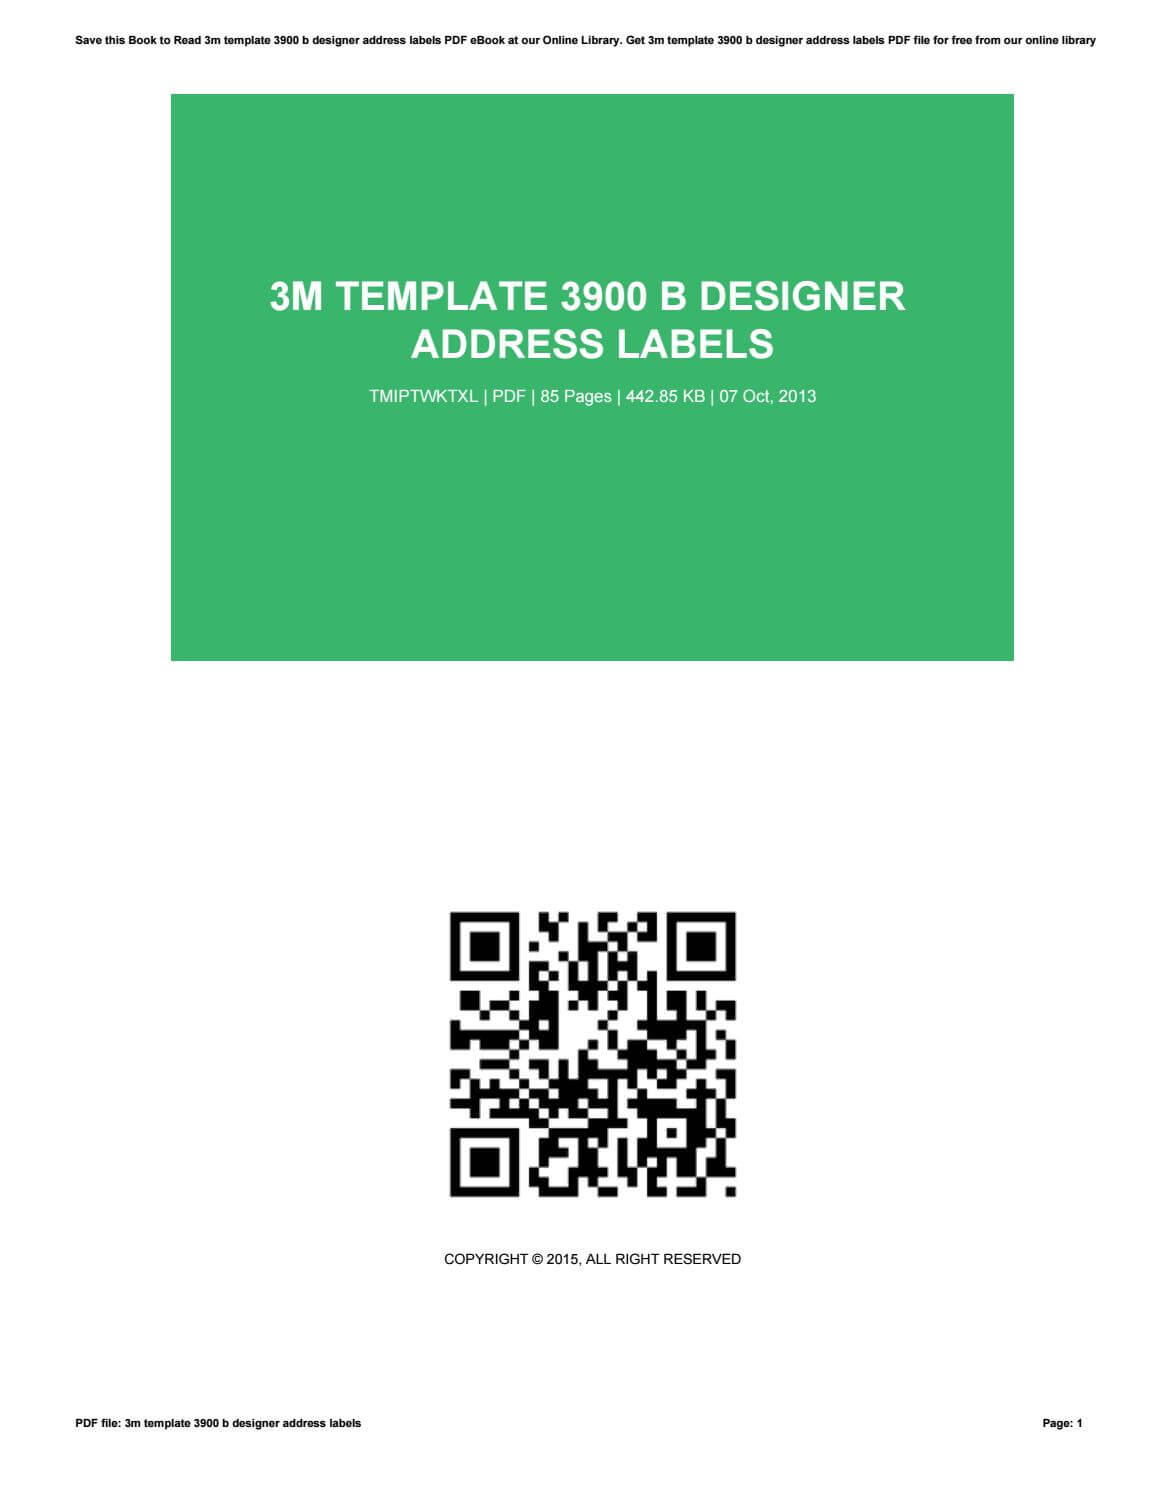 3M Template 3900 B Designer Address Labelskarenrosas3842 Inside 3M Label Templates